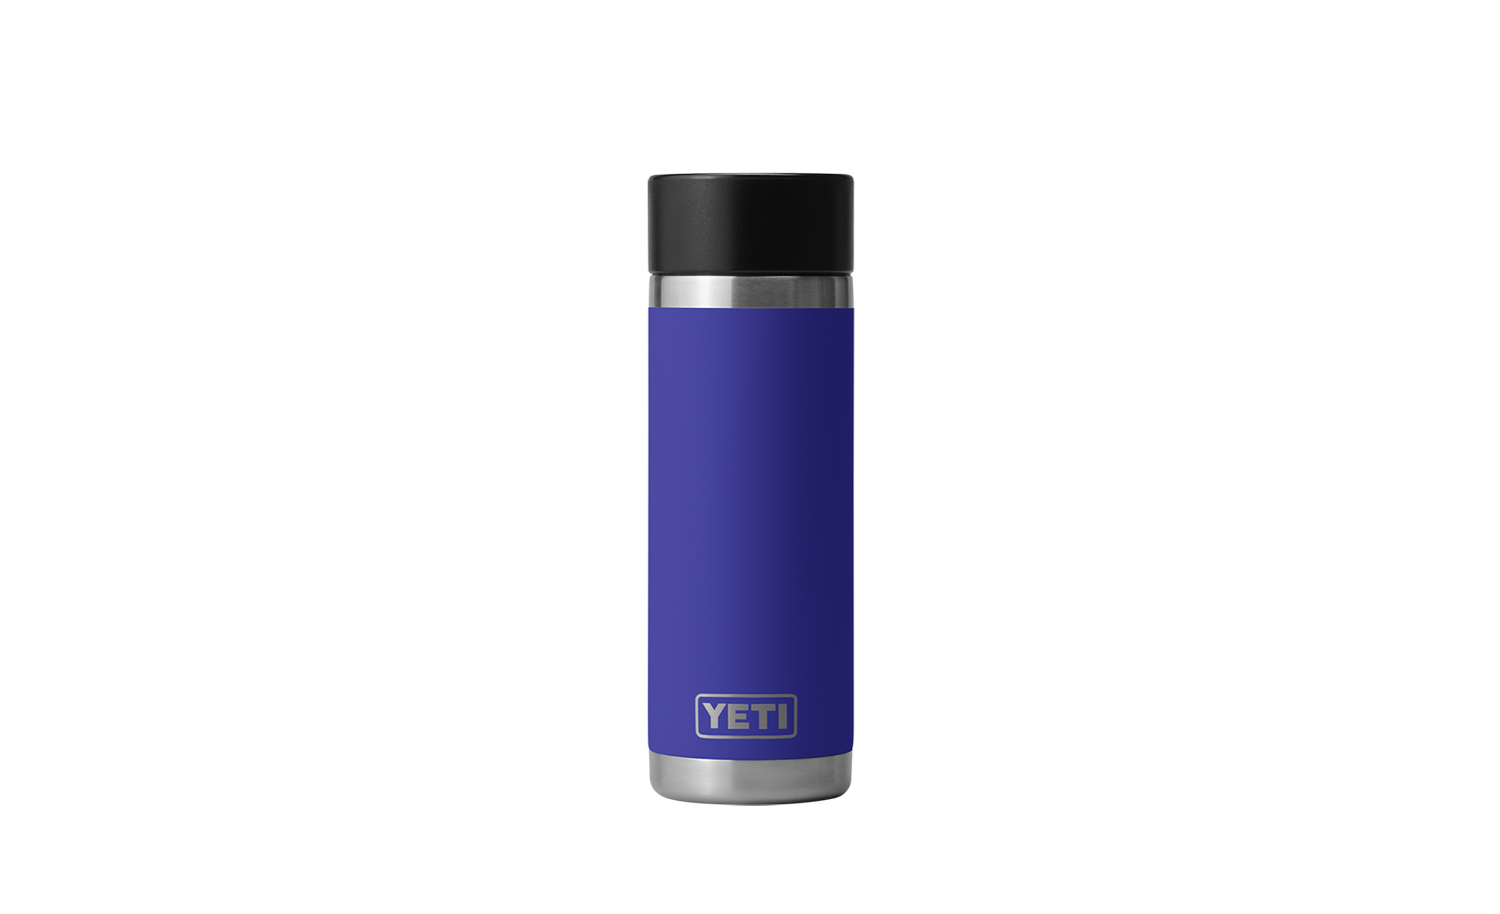 Yeti - Rambler 18 oz Bottle with Hotshot Cap - Black